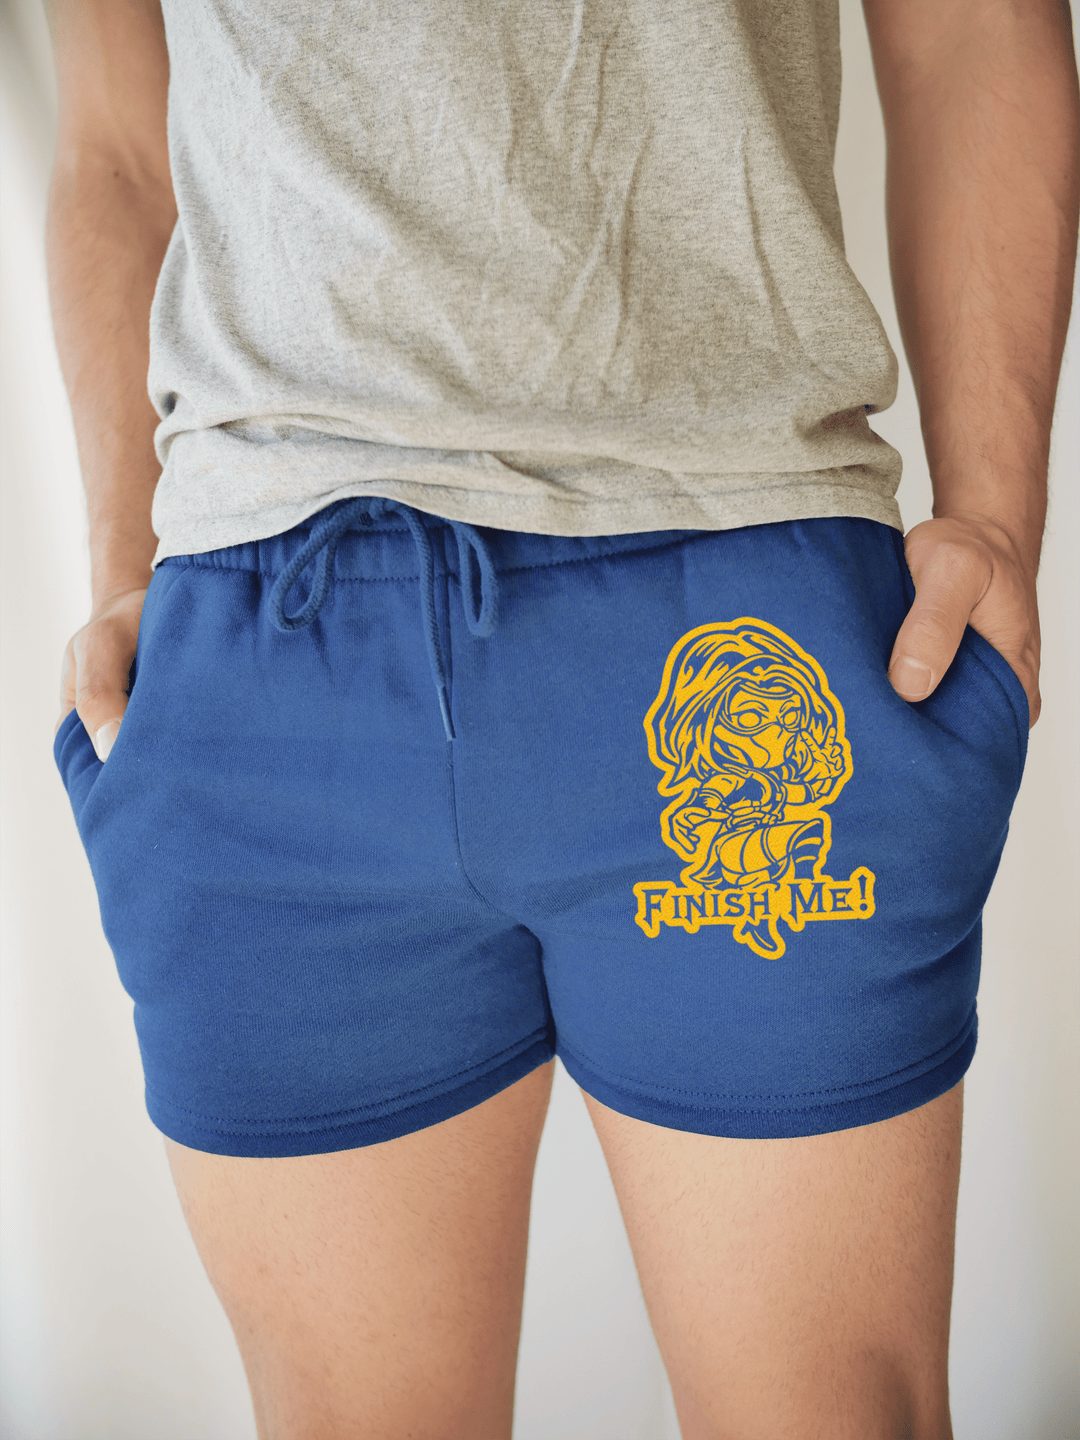 PixelThat Punderwear Shorts Royal Blue / S / Front Finish Me Men's Gym Shorts